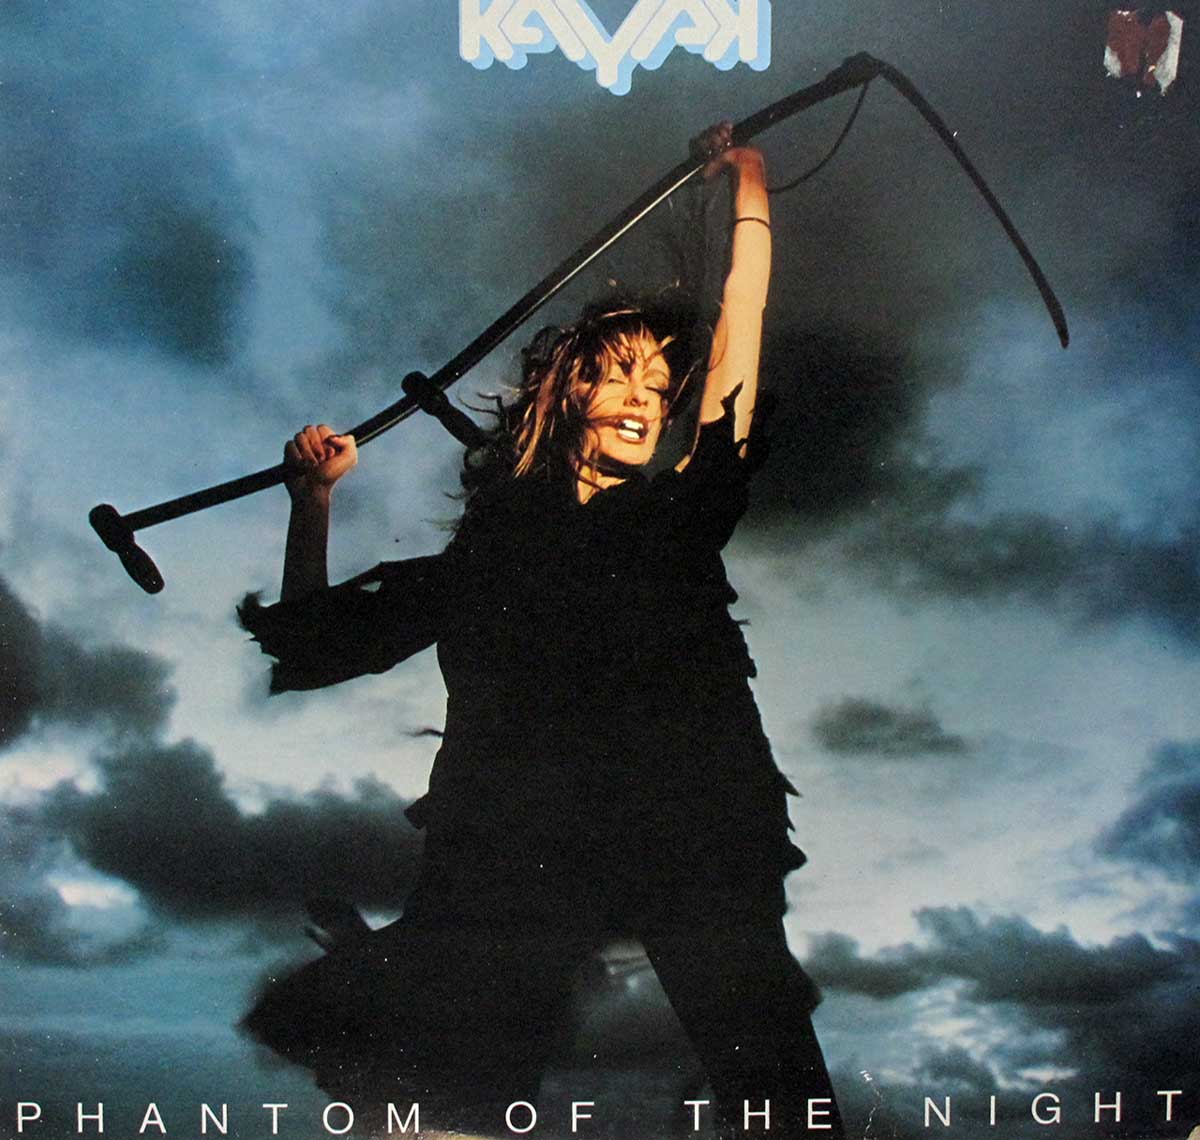 Front Cover Photo of "KAYAK - Phantom of the Night" Album 